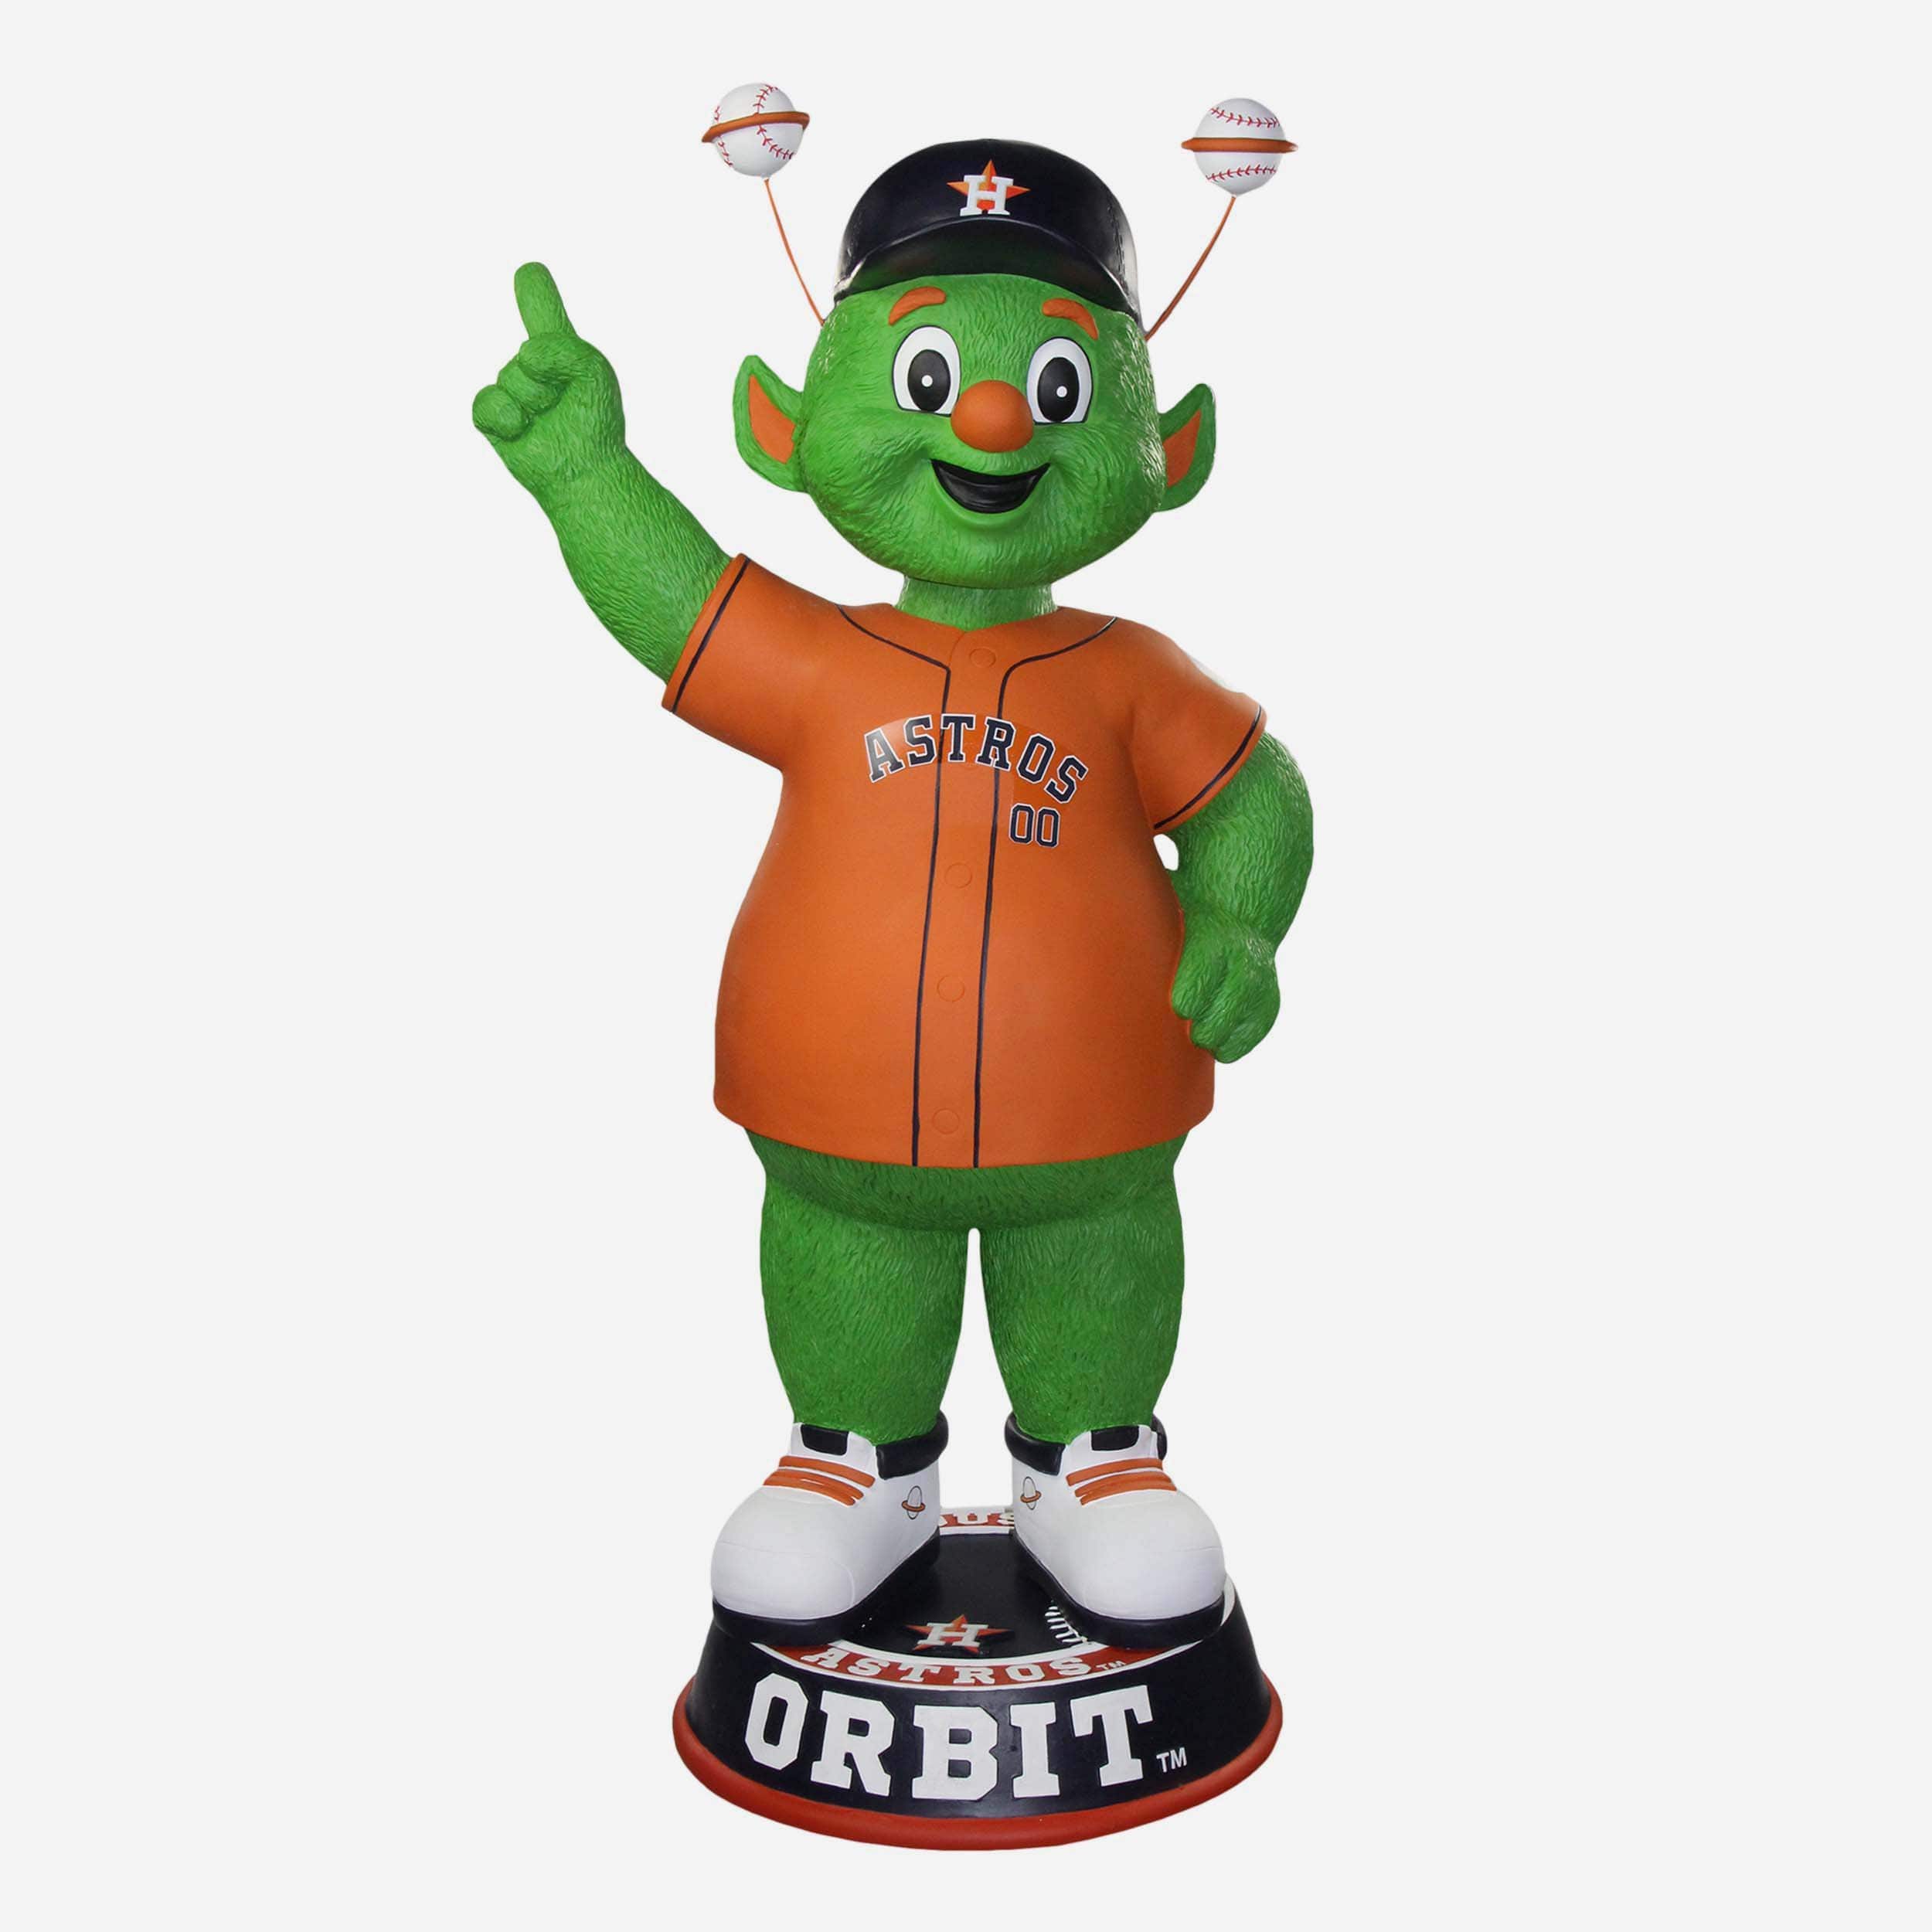 Astros mascot Orbit busts out 'Single Ladies' dance